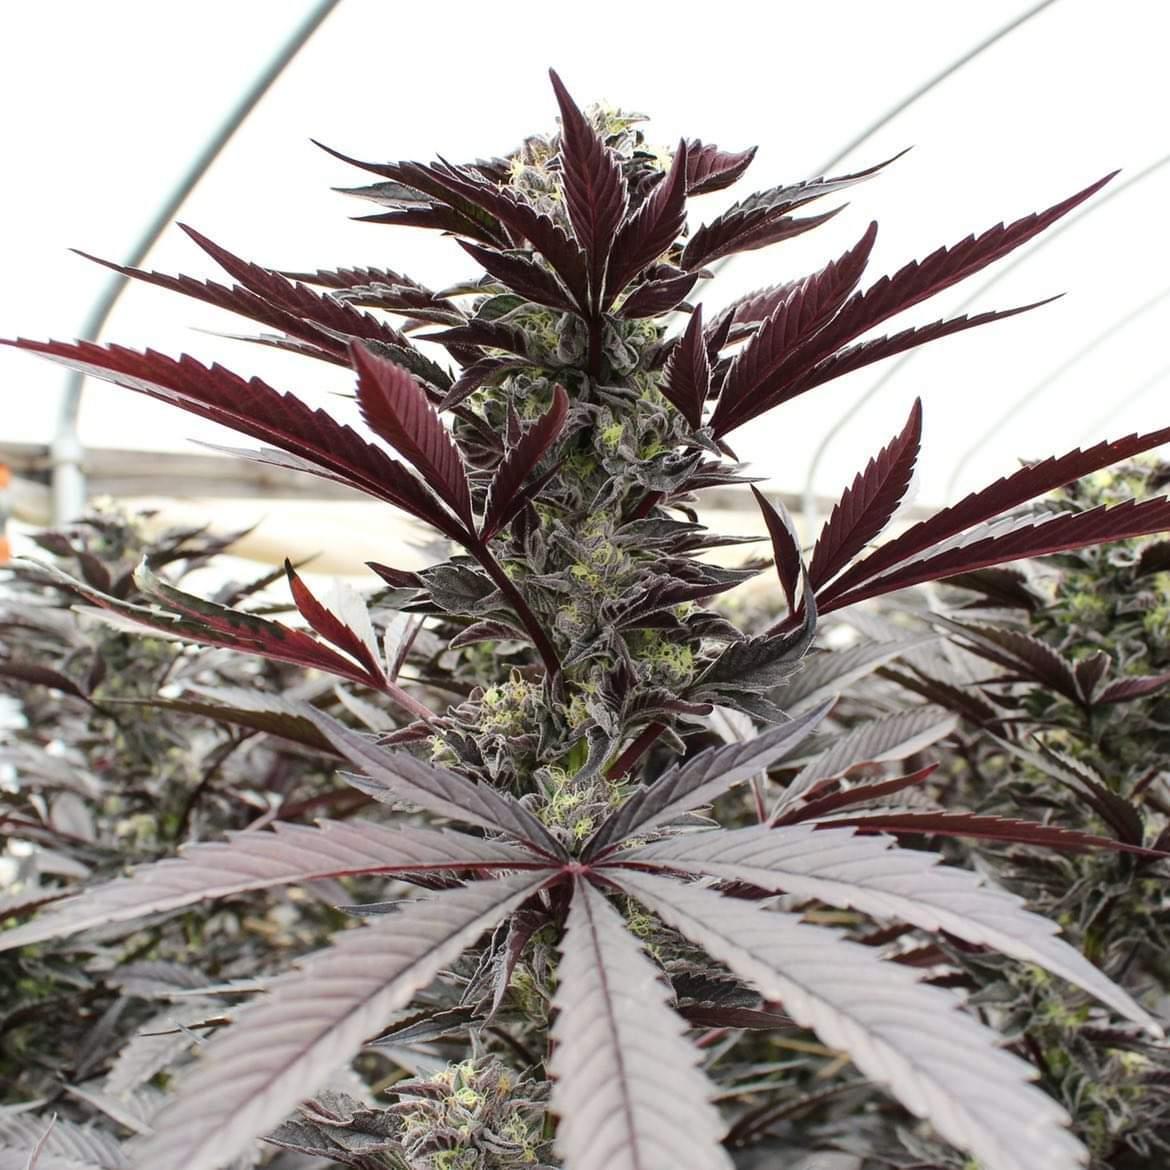 Buy Panama Red strain cannabis in Massachusetts - Discreet shipping